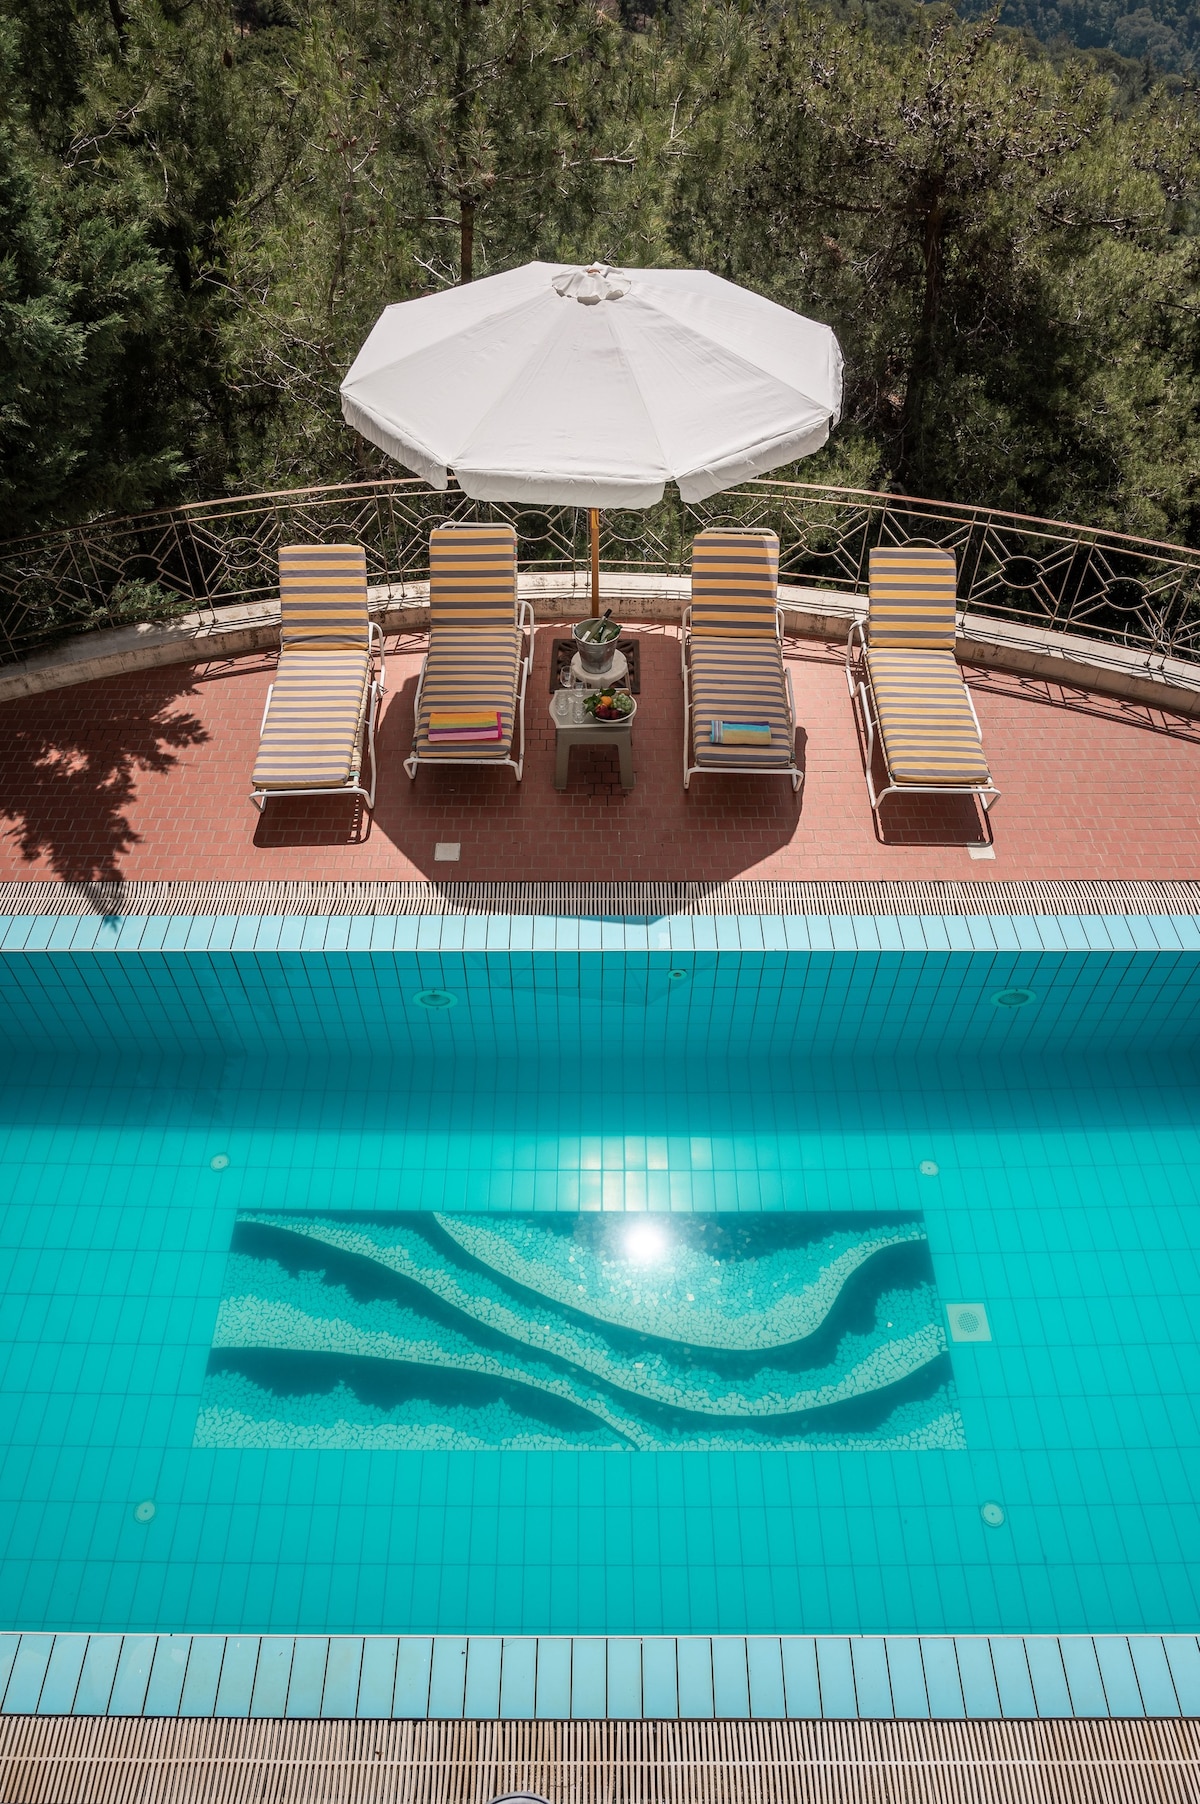 Villa Verde with Pool